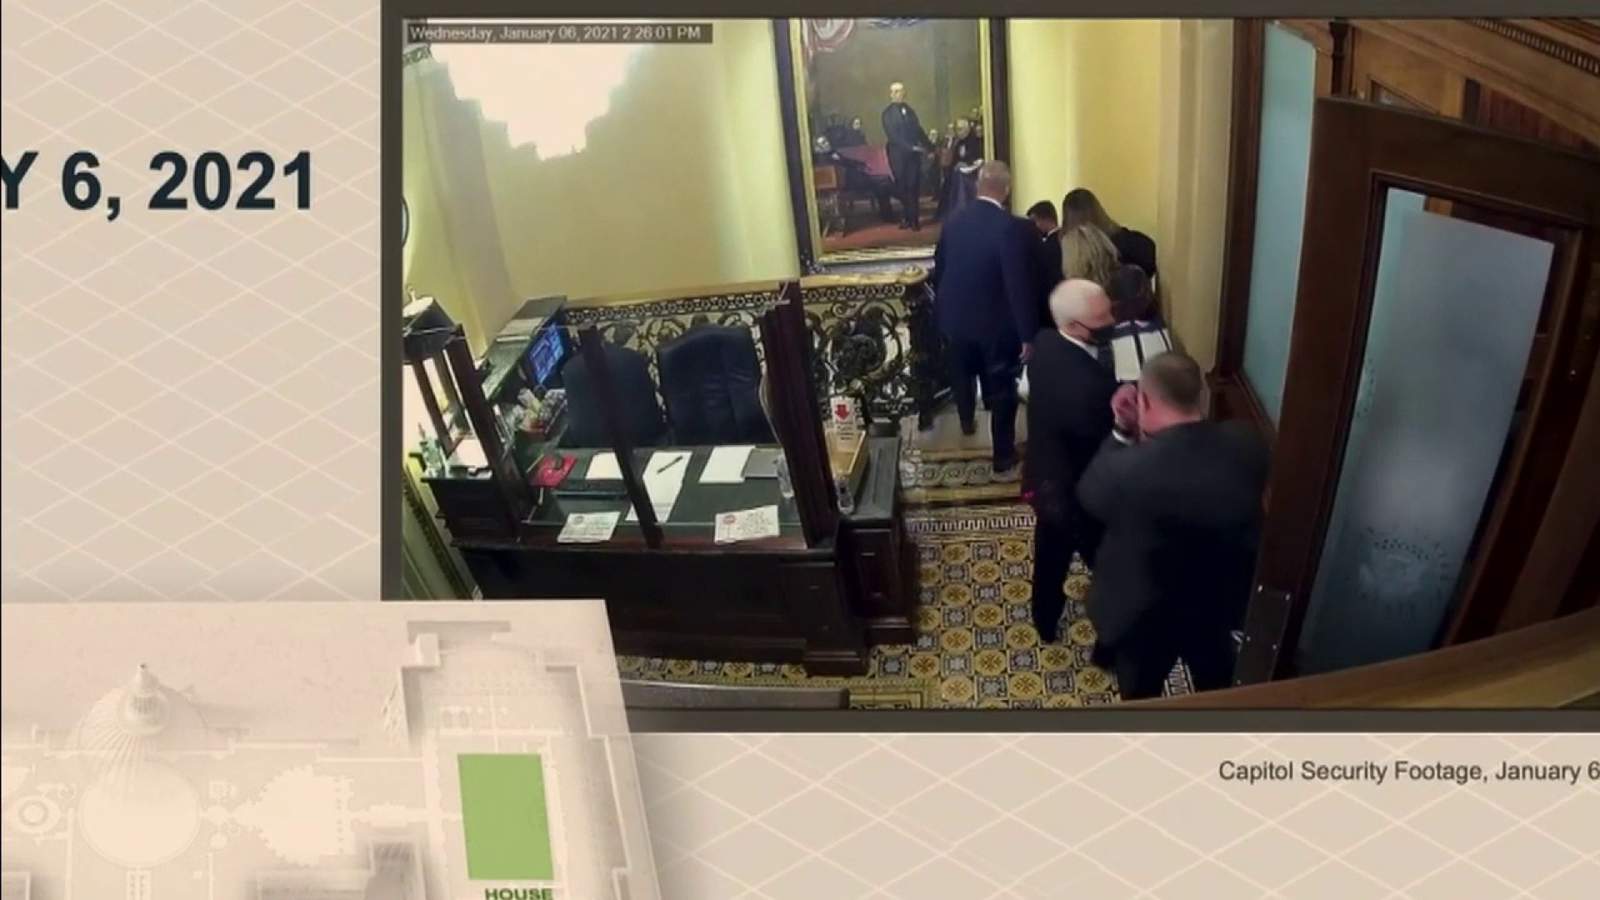 Trump trial video shows vast scope, danger of Capitol riot